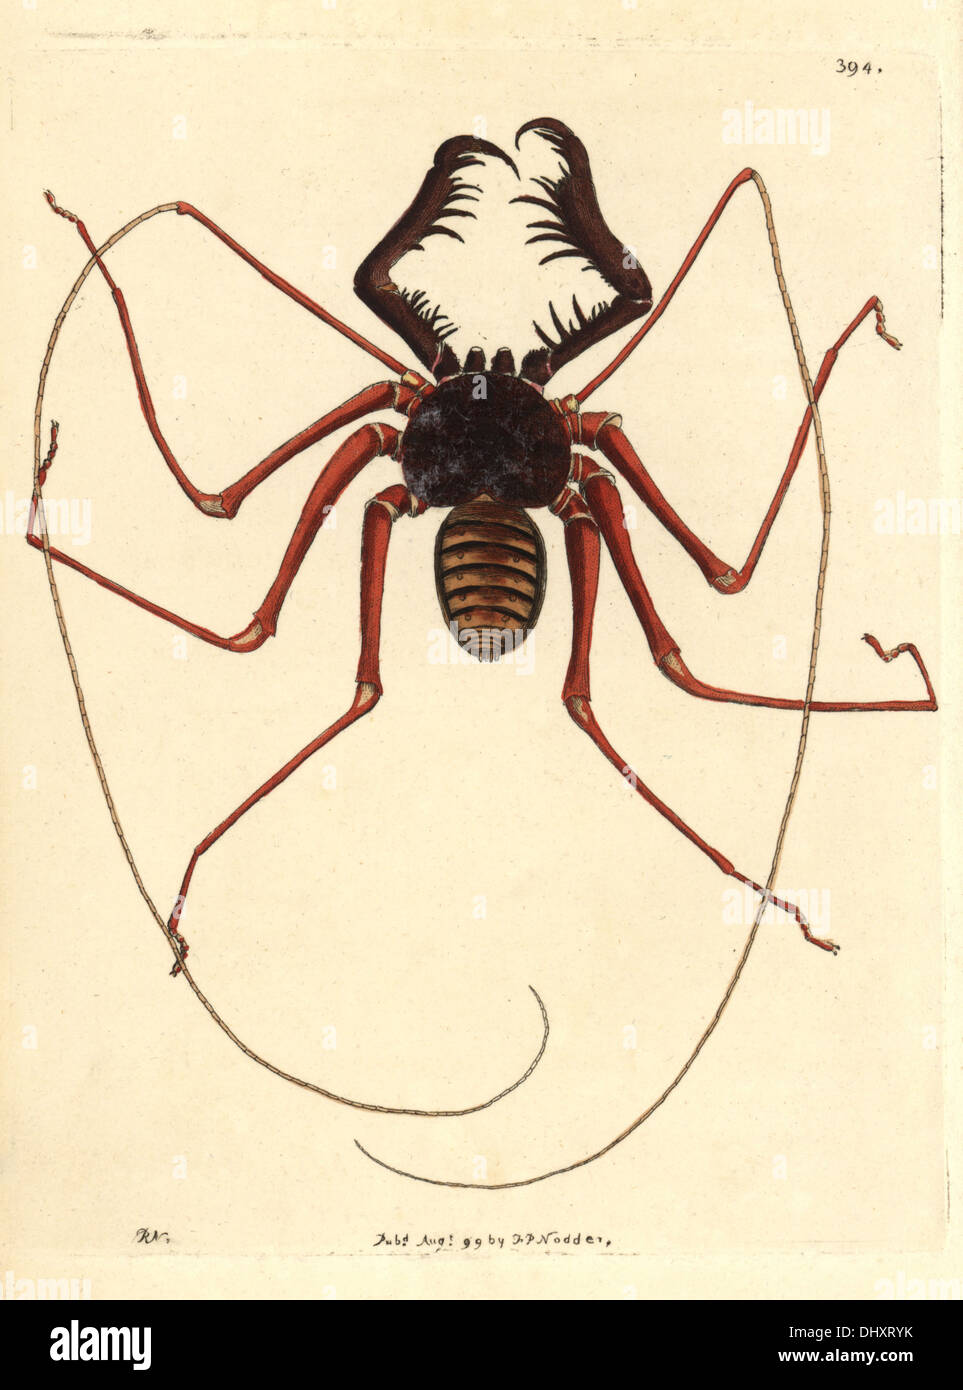 Phrynus ceylonicus, an amblypygid or whip spider from Sri Lanka. Stock Photo